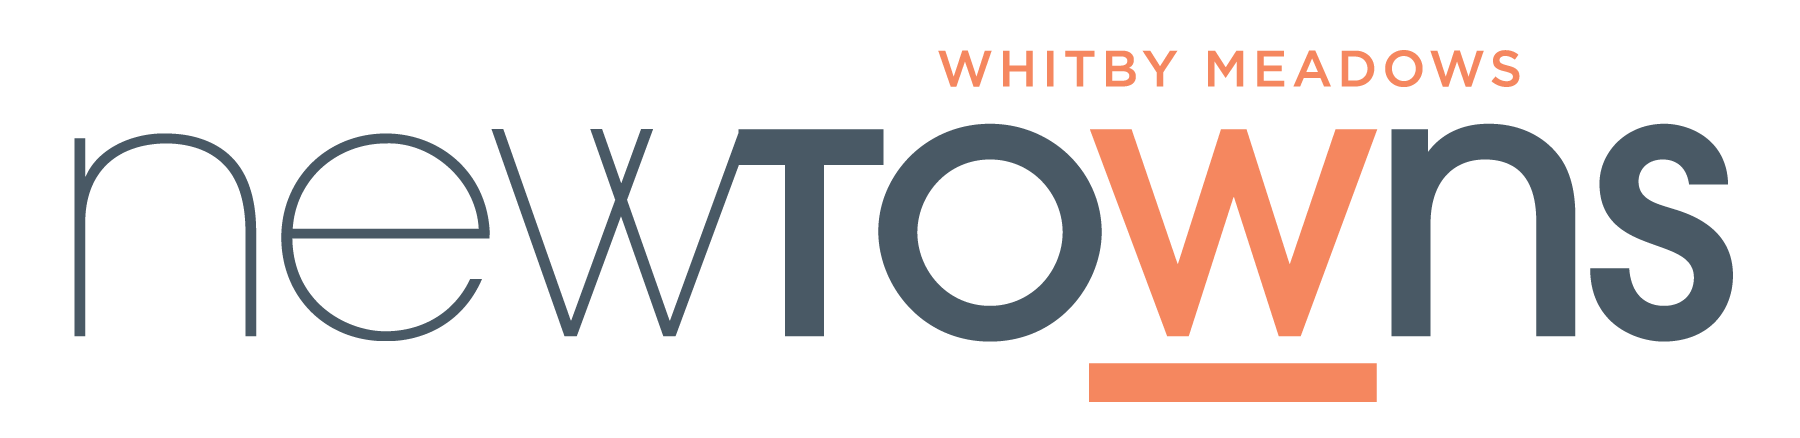 New Towns - Logo